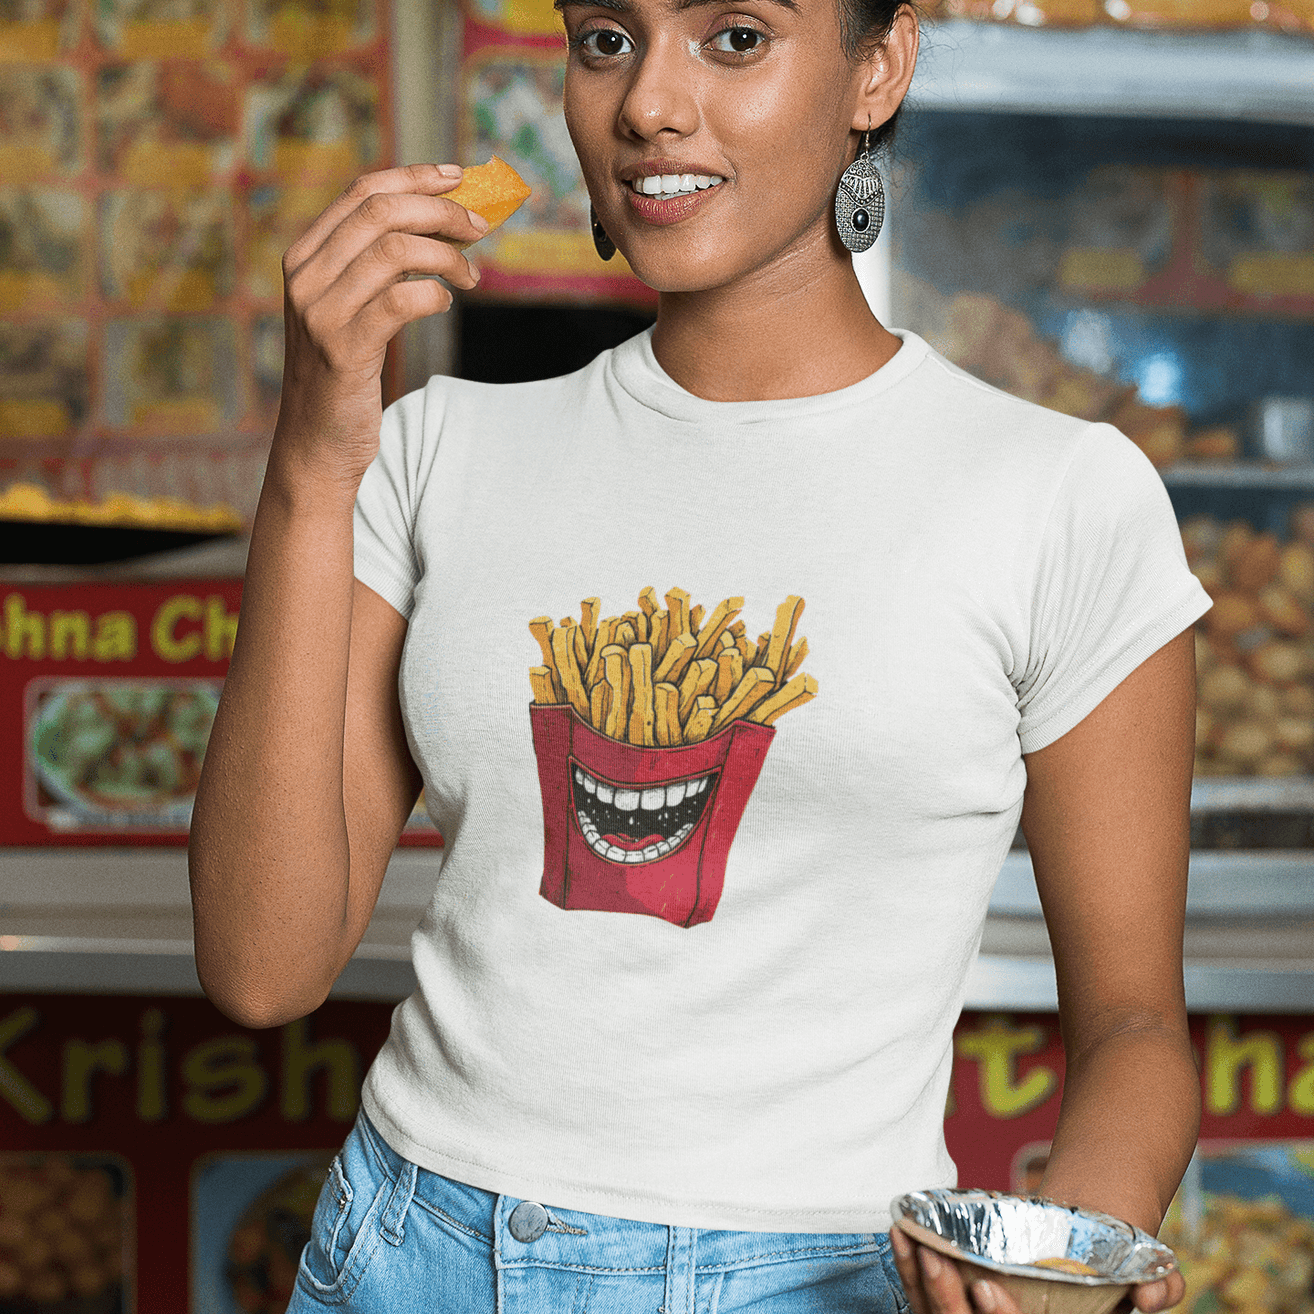 Fries-Day Women's Fun Graphic T-Shirt - Celebrate FriDay